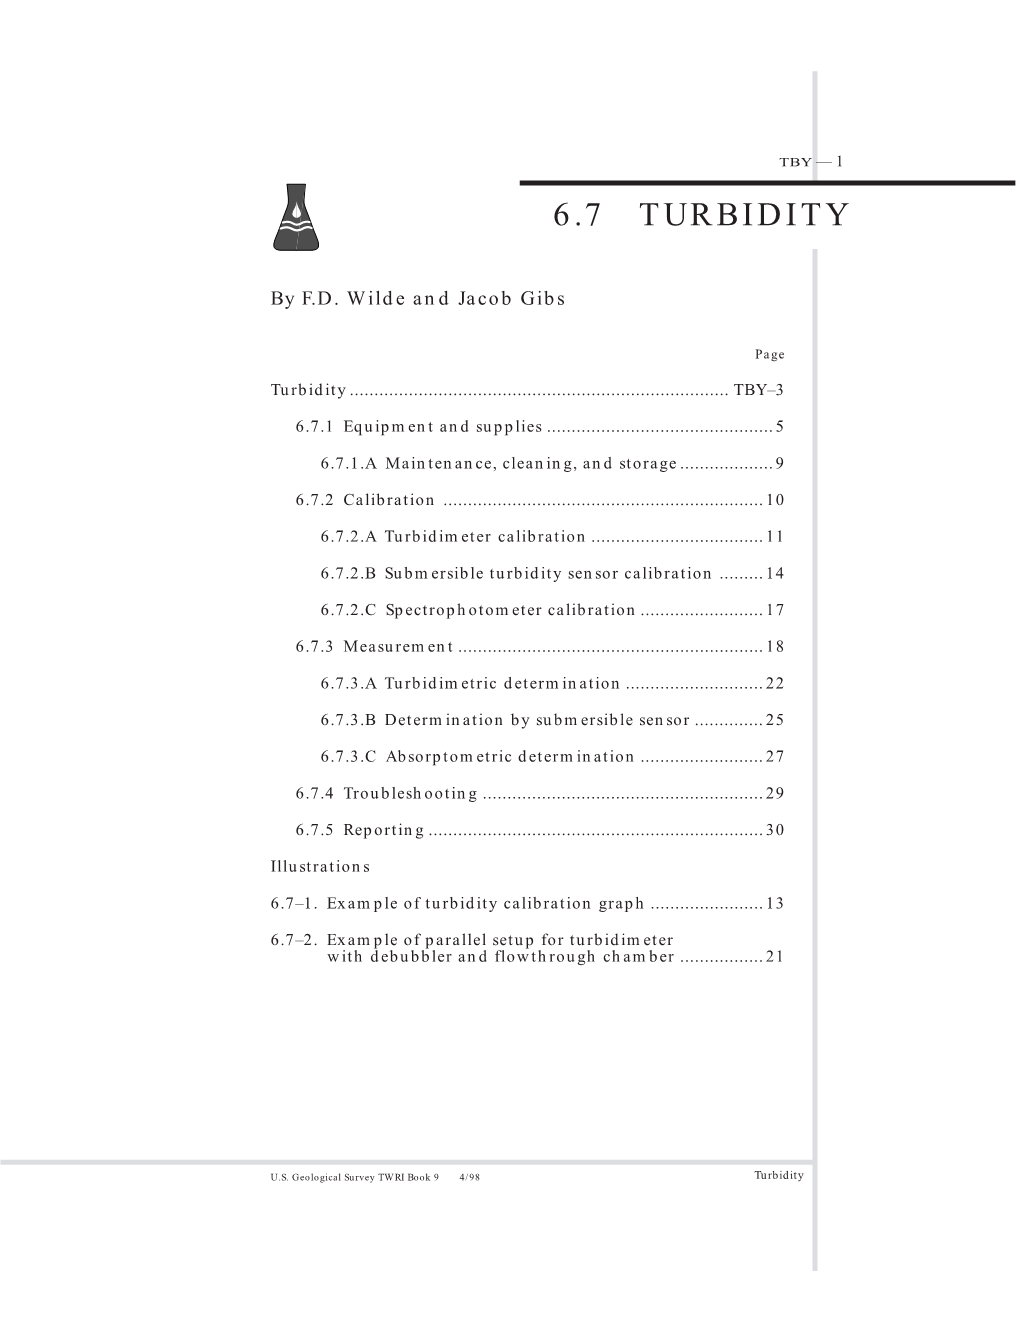 6.7 Turbidity